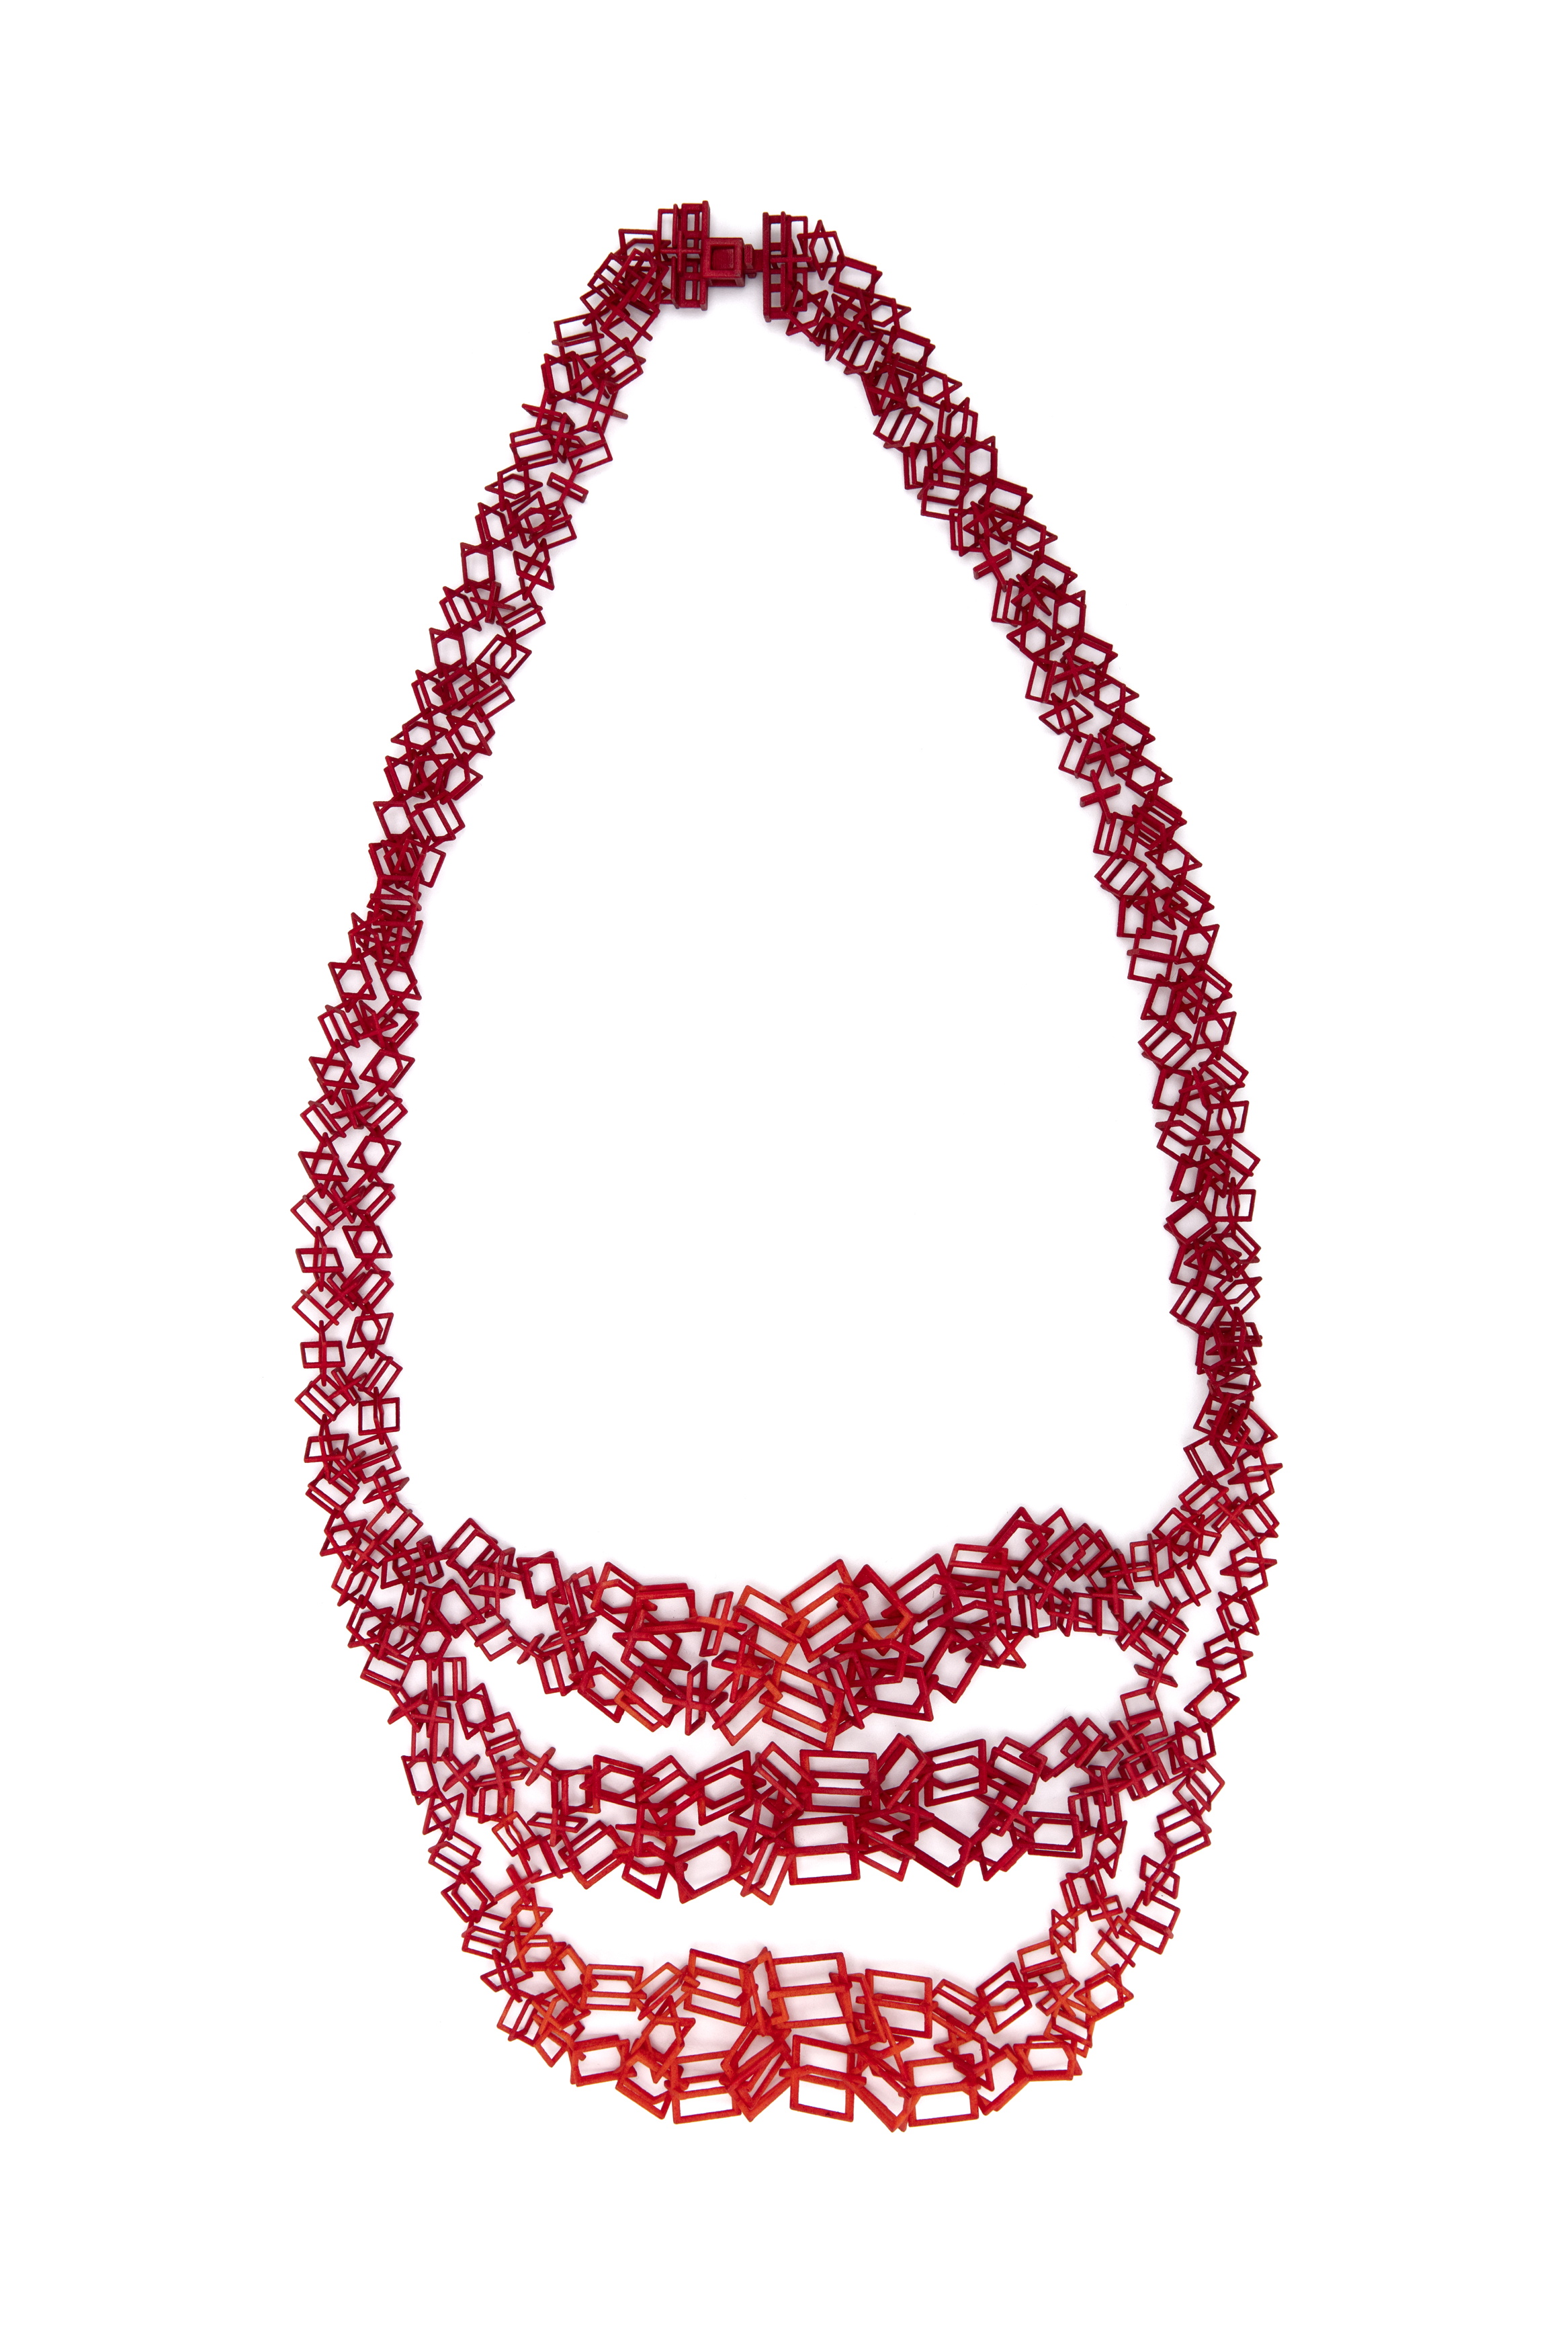 'Crossbox (4) 2013' necklace by Bin Dixon-Ward